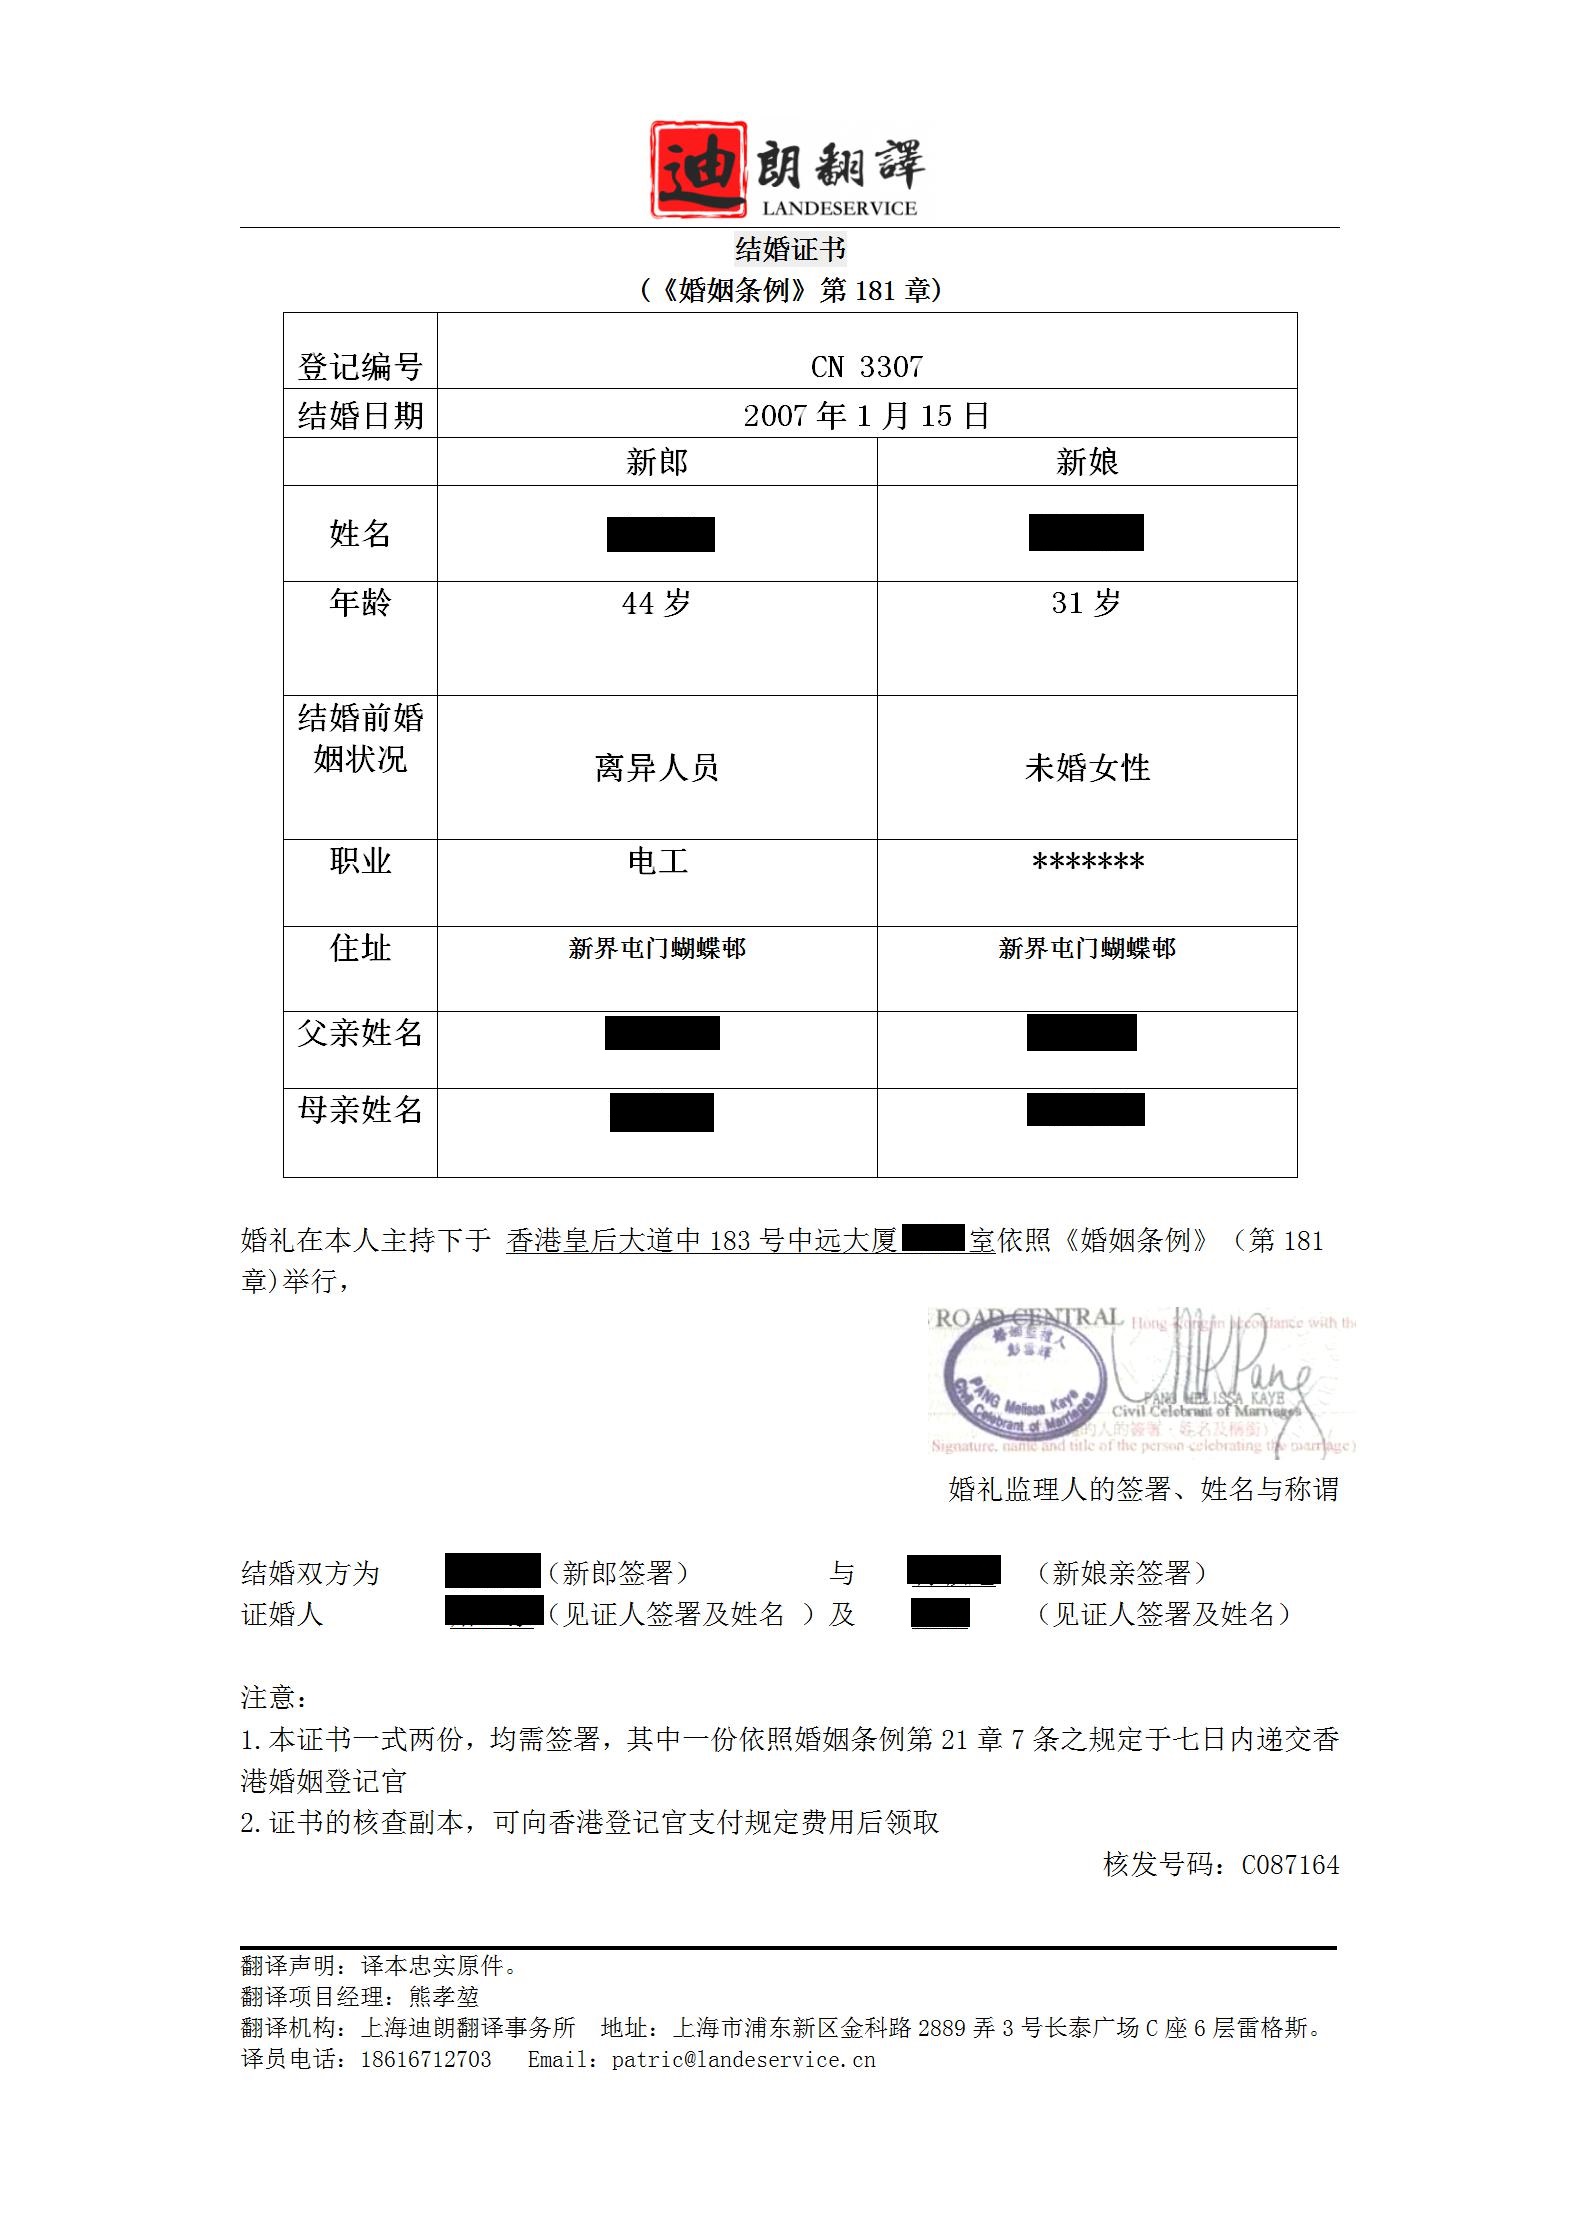 Hongkong Marriage Certificate Translation English to Chinese